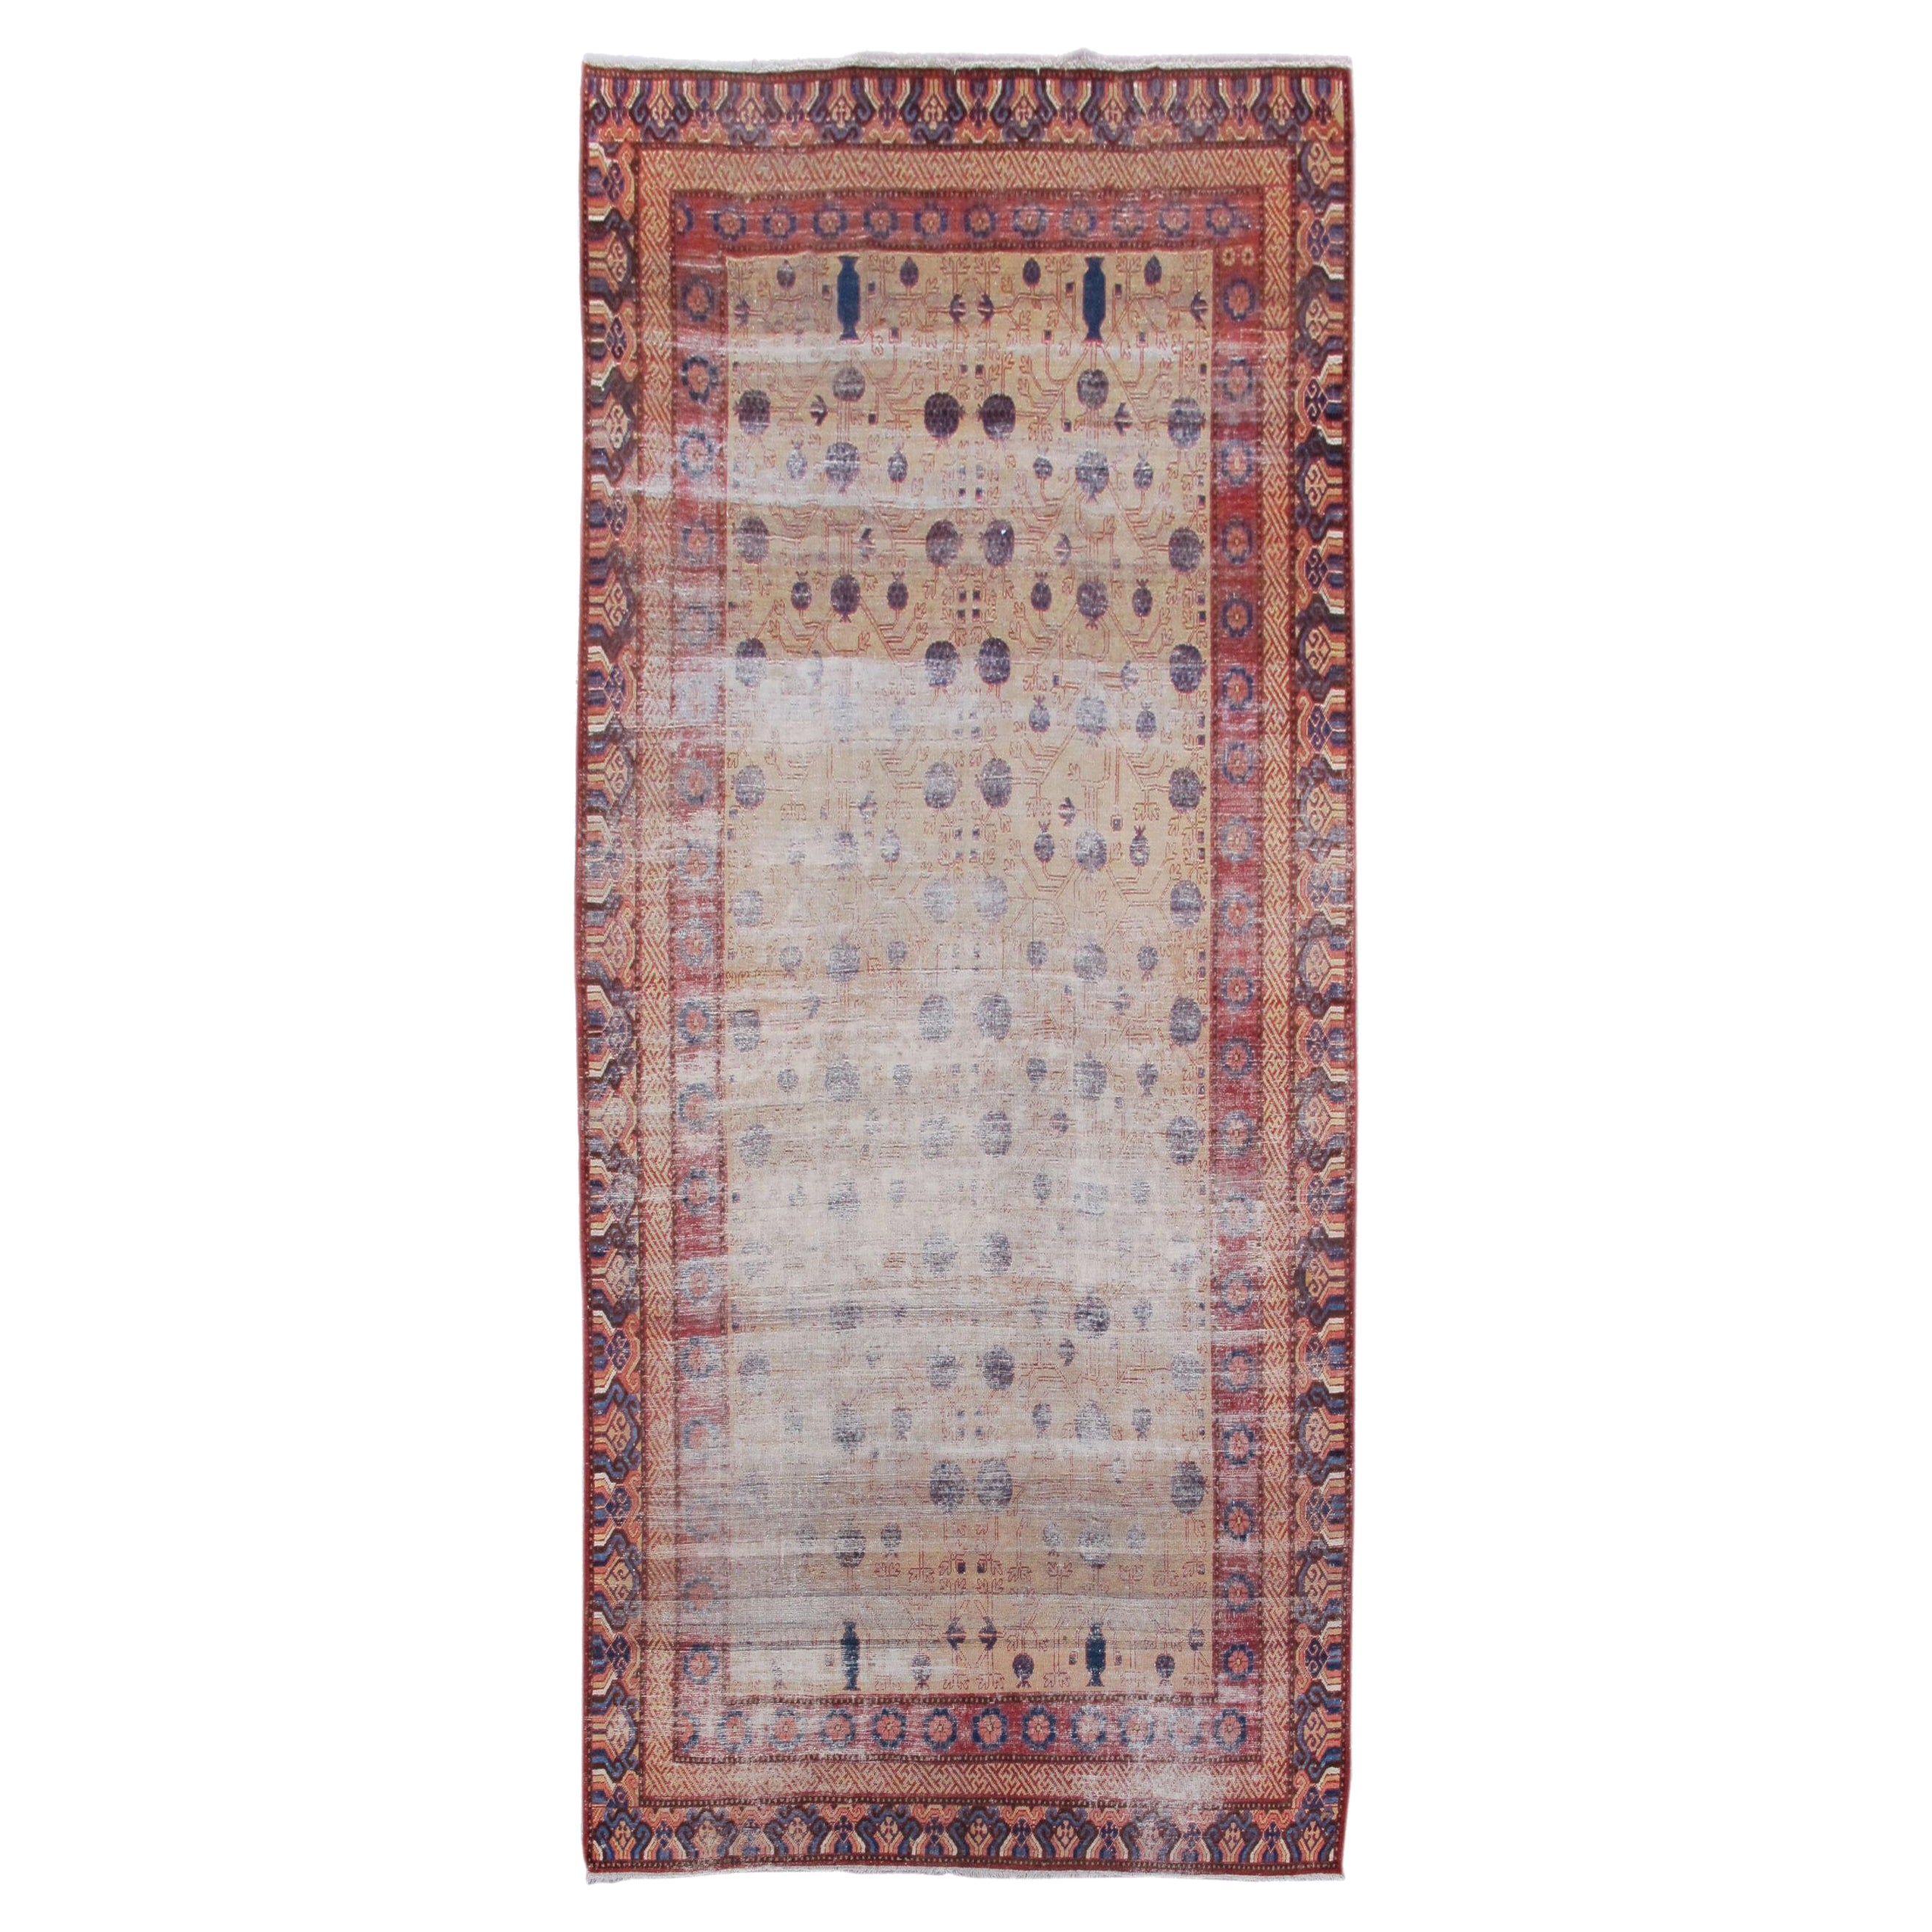 Antiker Khotan-Teppich, frühes 19. Jahrhundert